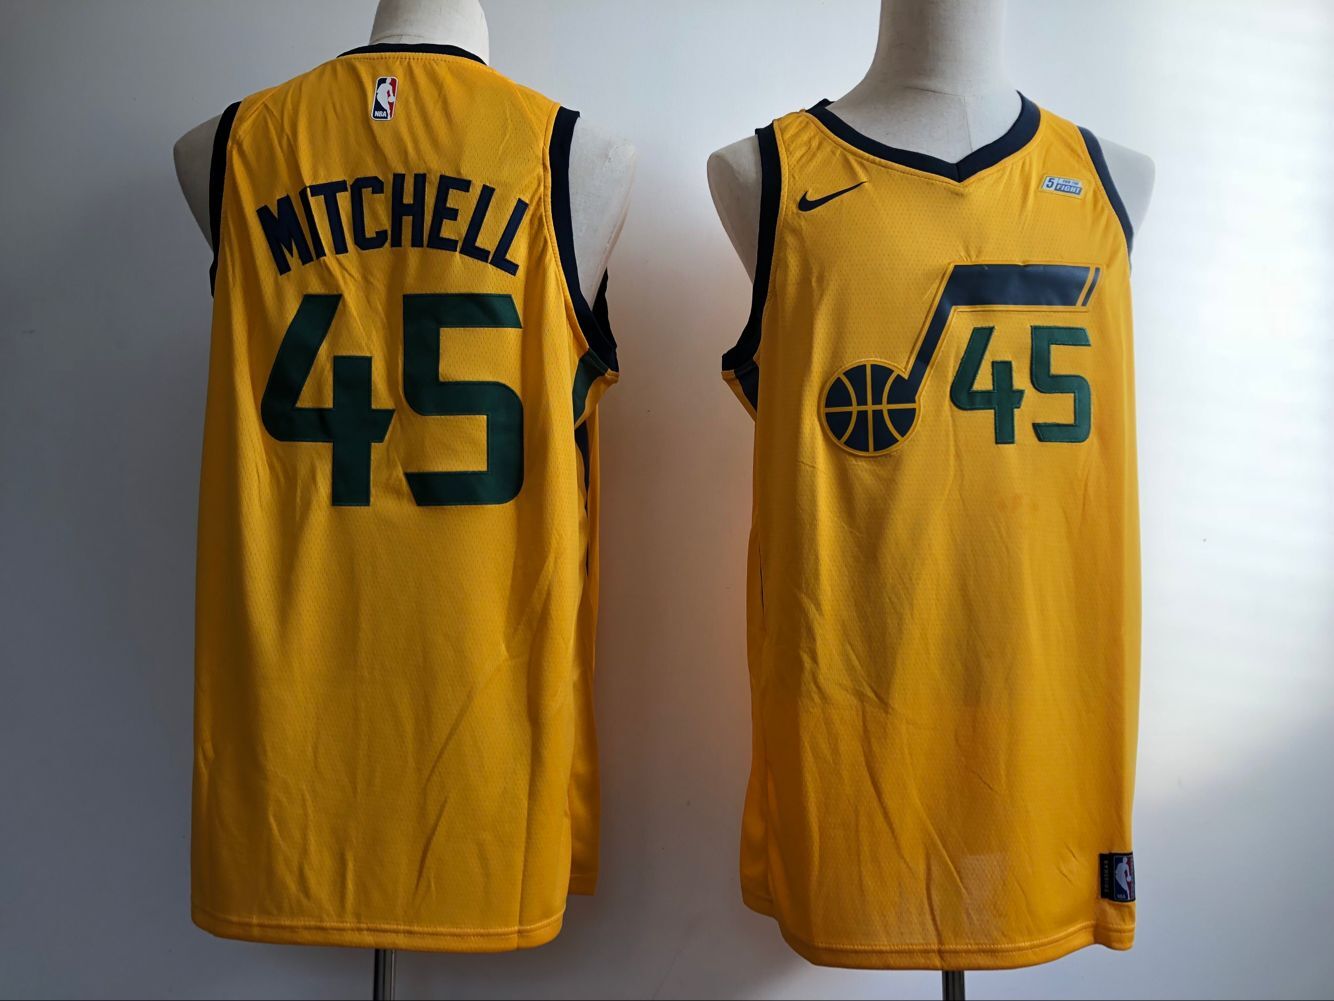 2018 Men Utah Jazz #45 Mitchell yellow Nike NBA Jerseys